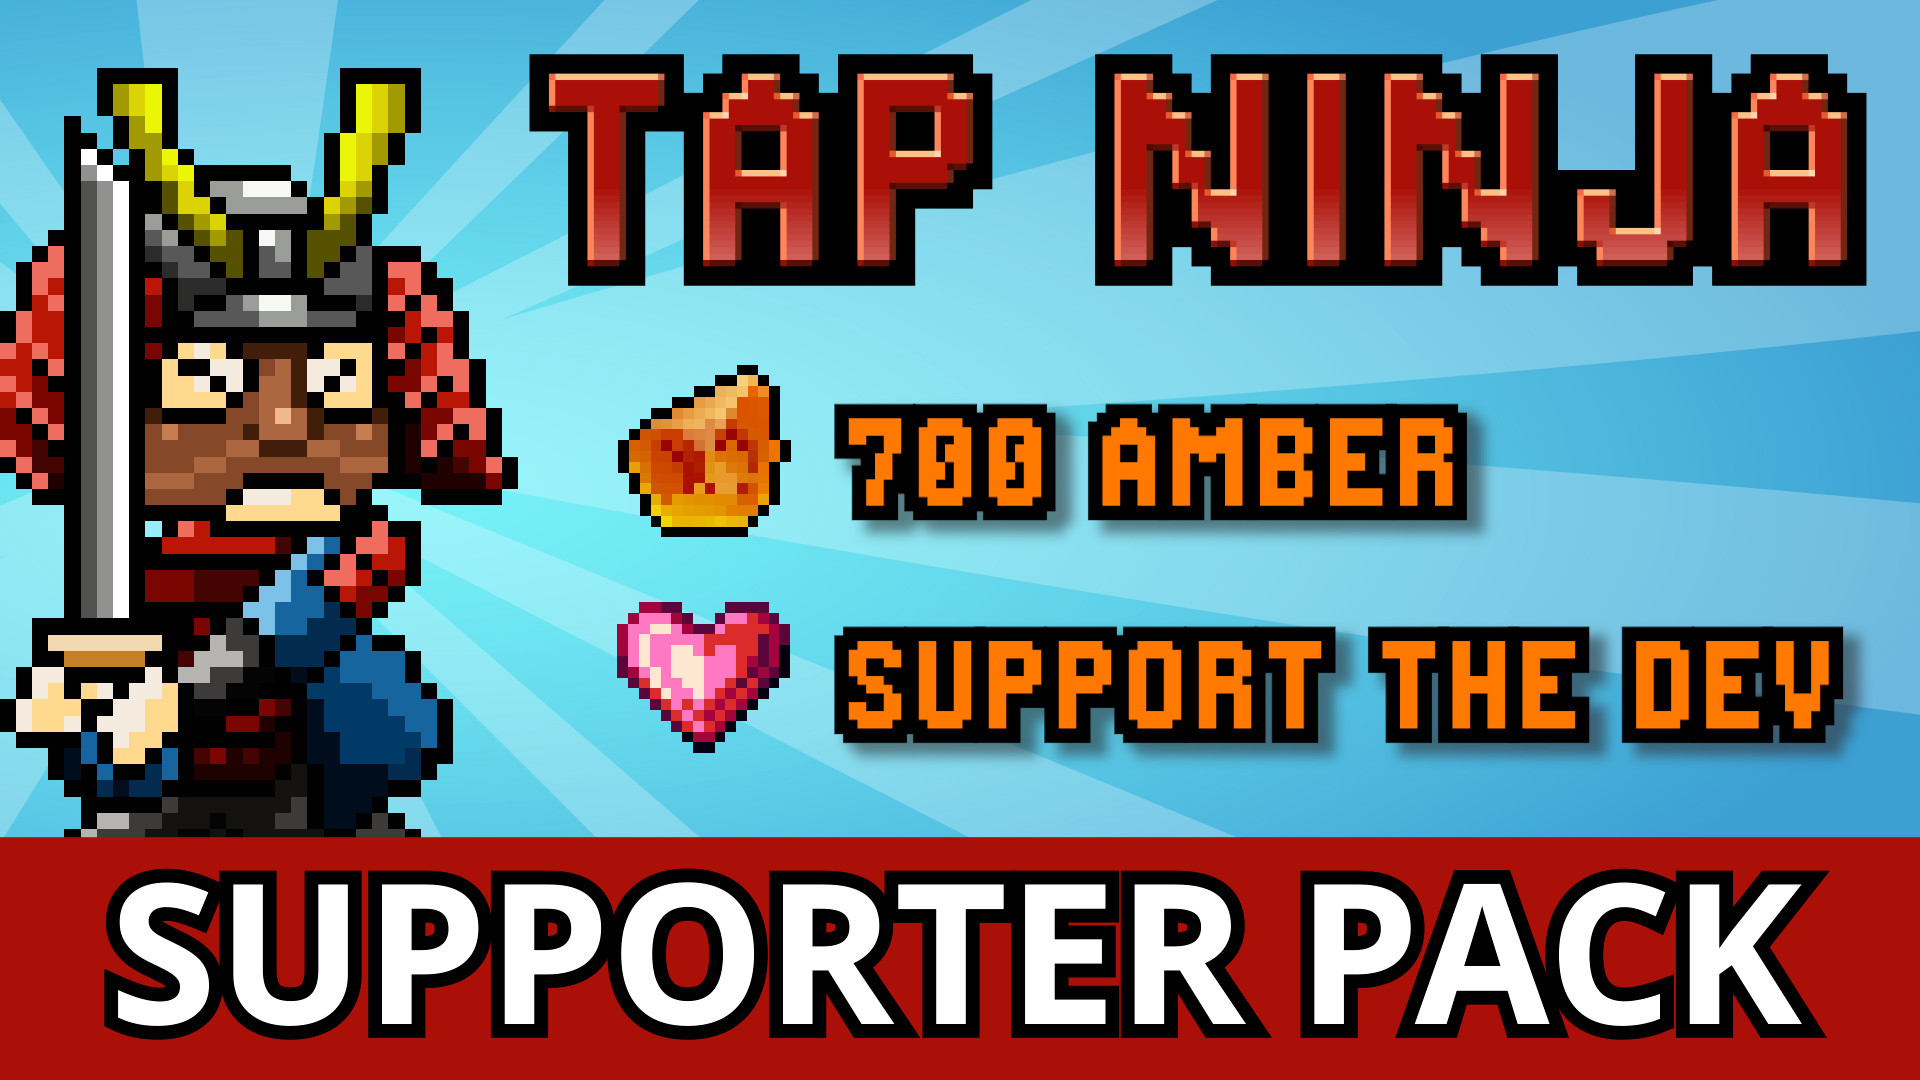 Tap Ninja - Supporter Pack Featured Screenshot #1